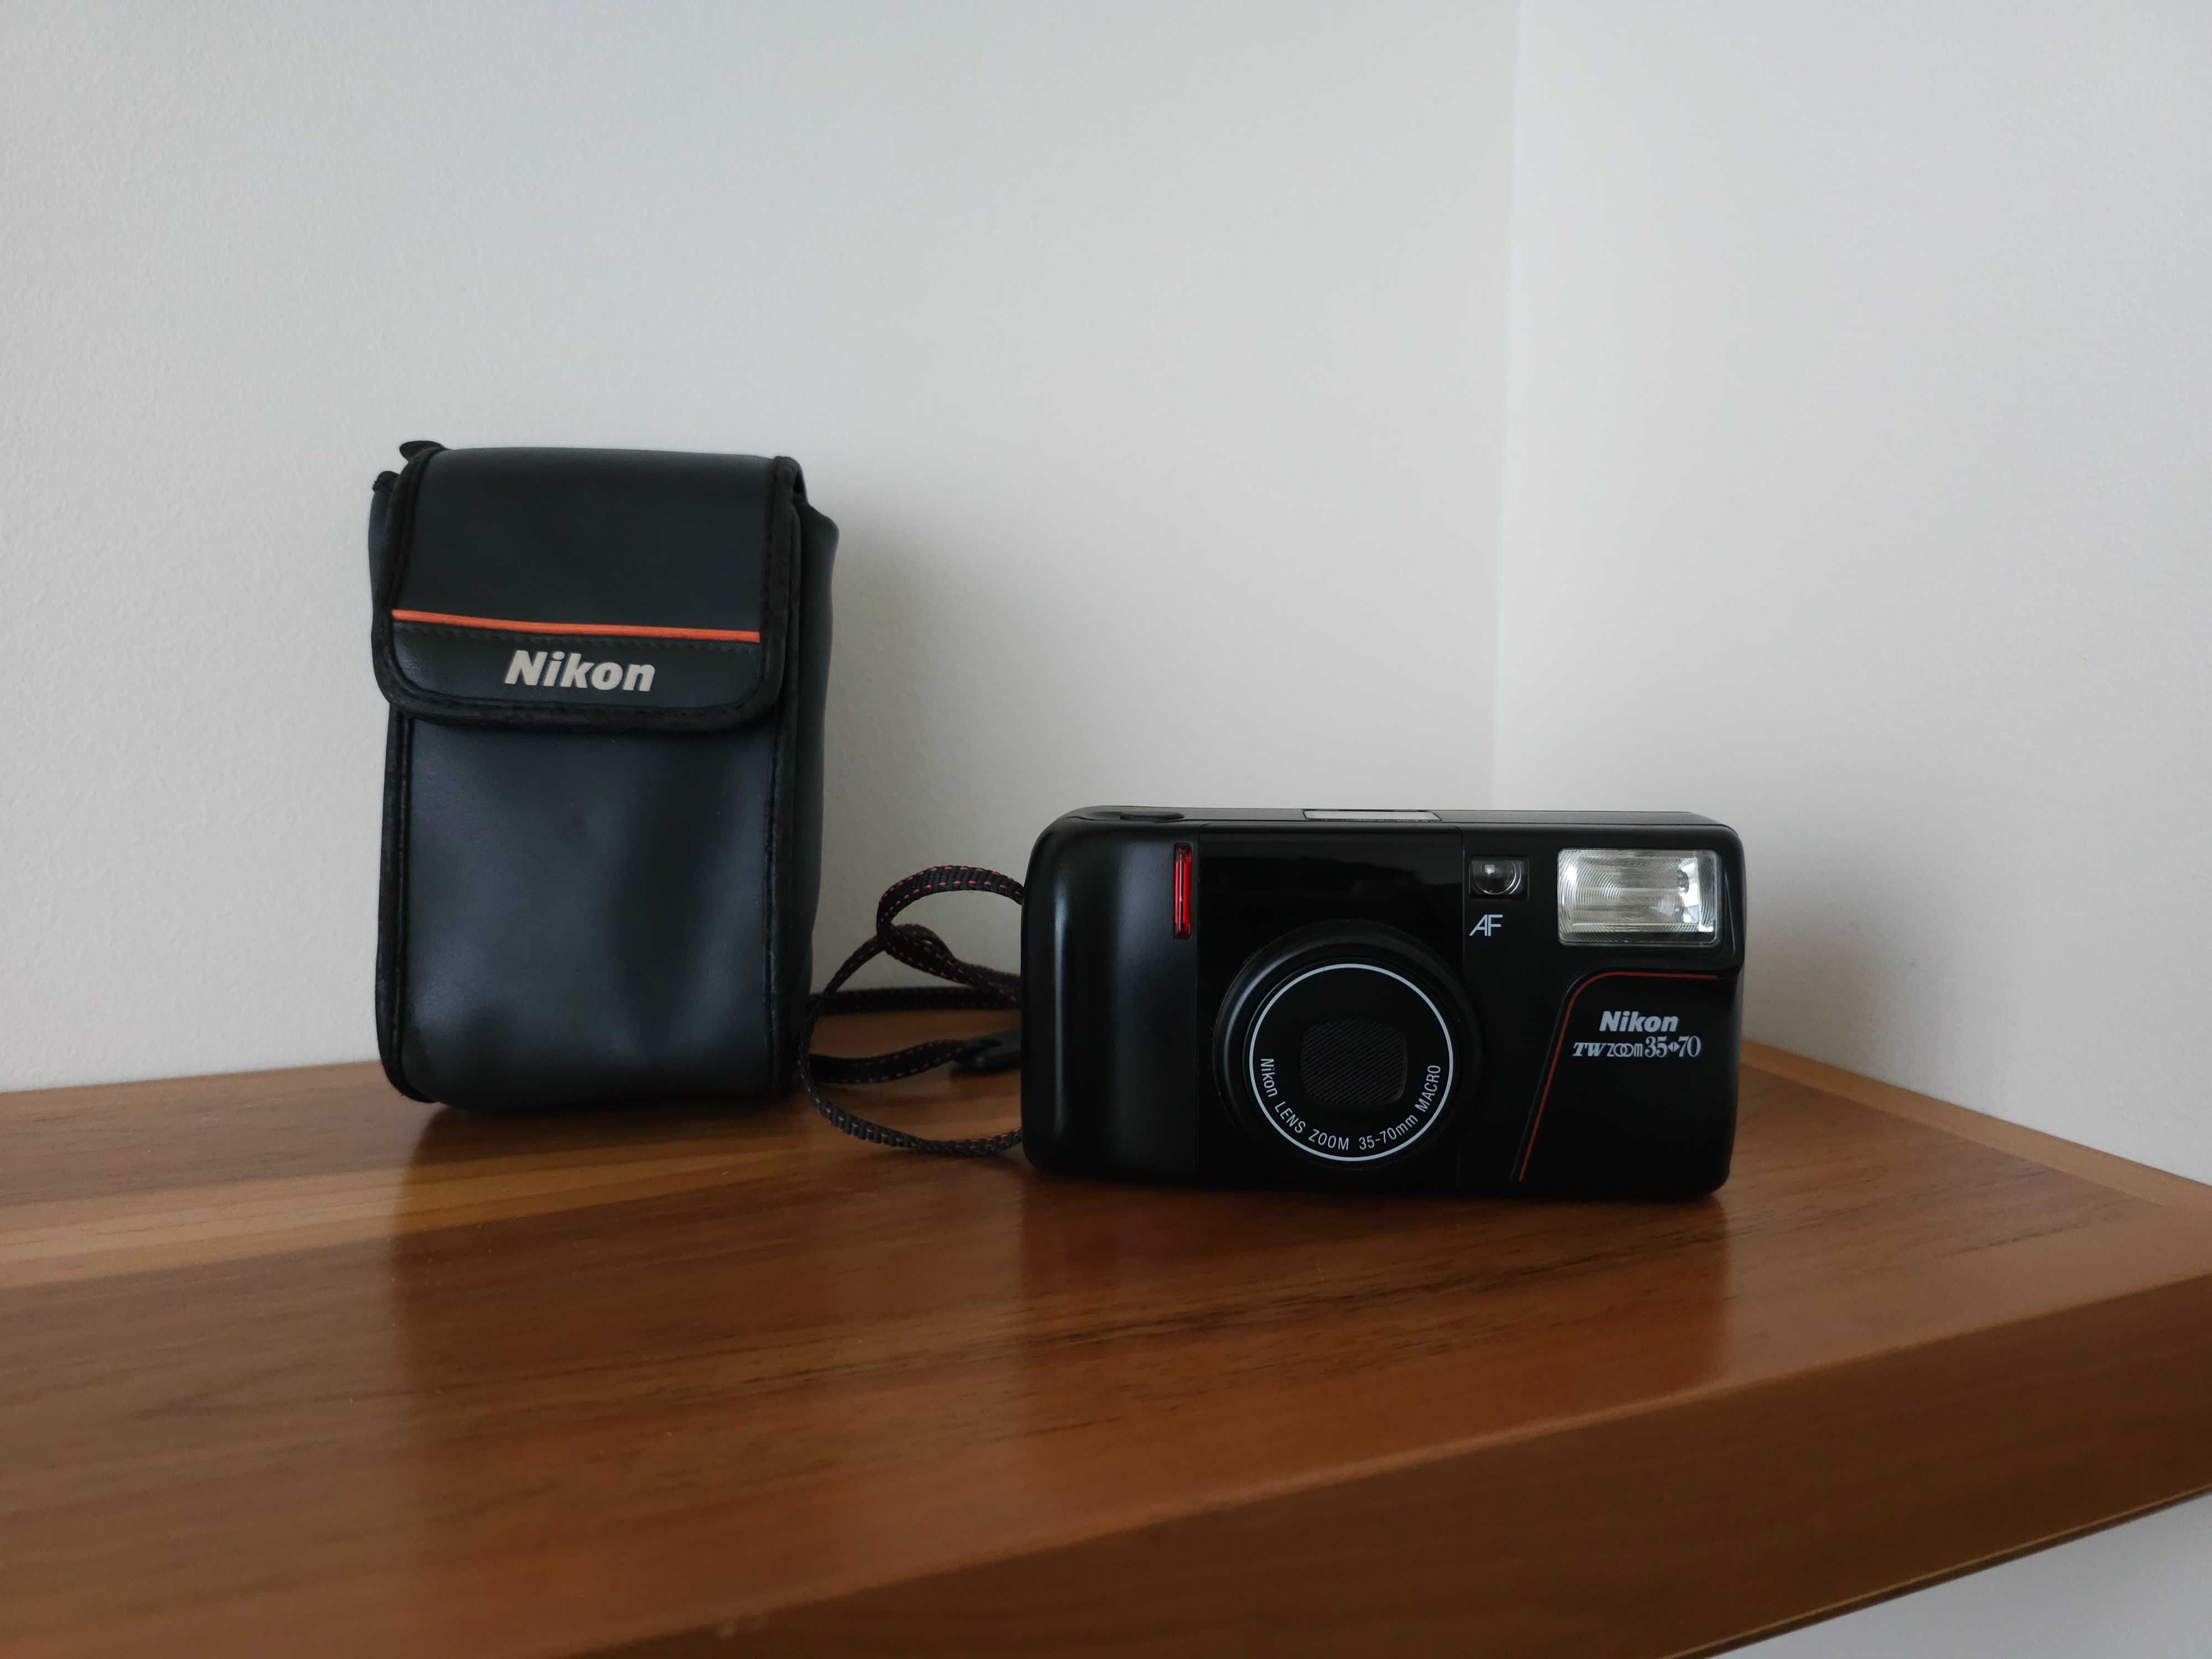 Maquina analógica Nikon Tw Zoom 35-70